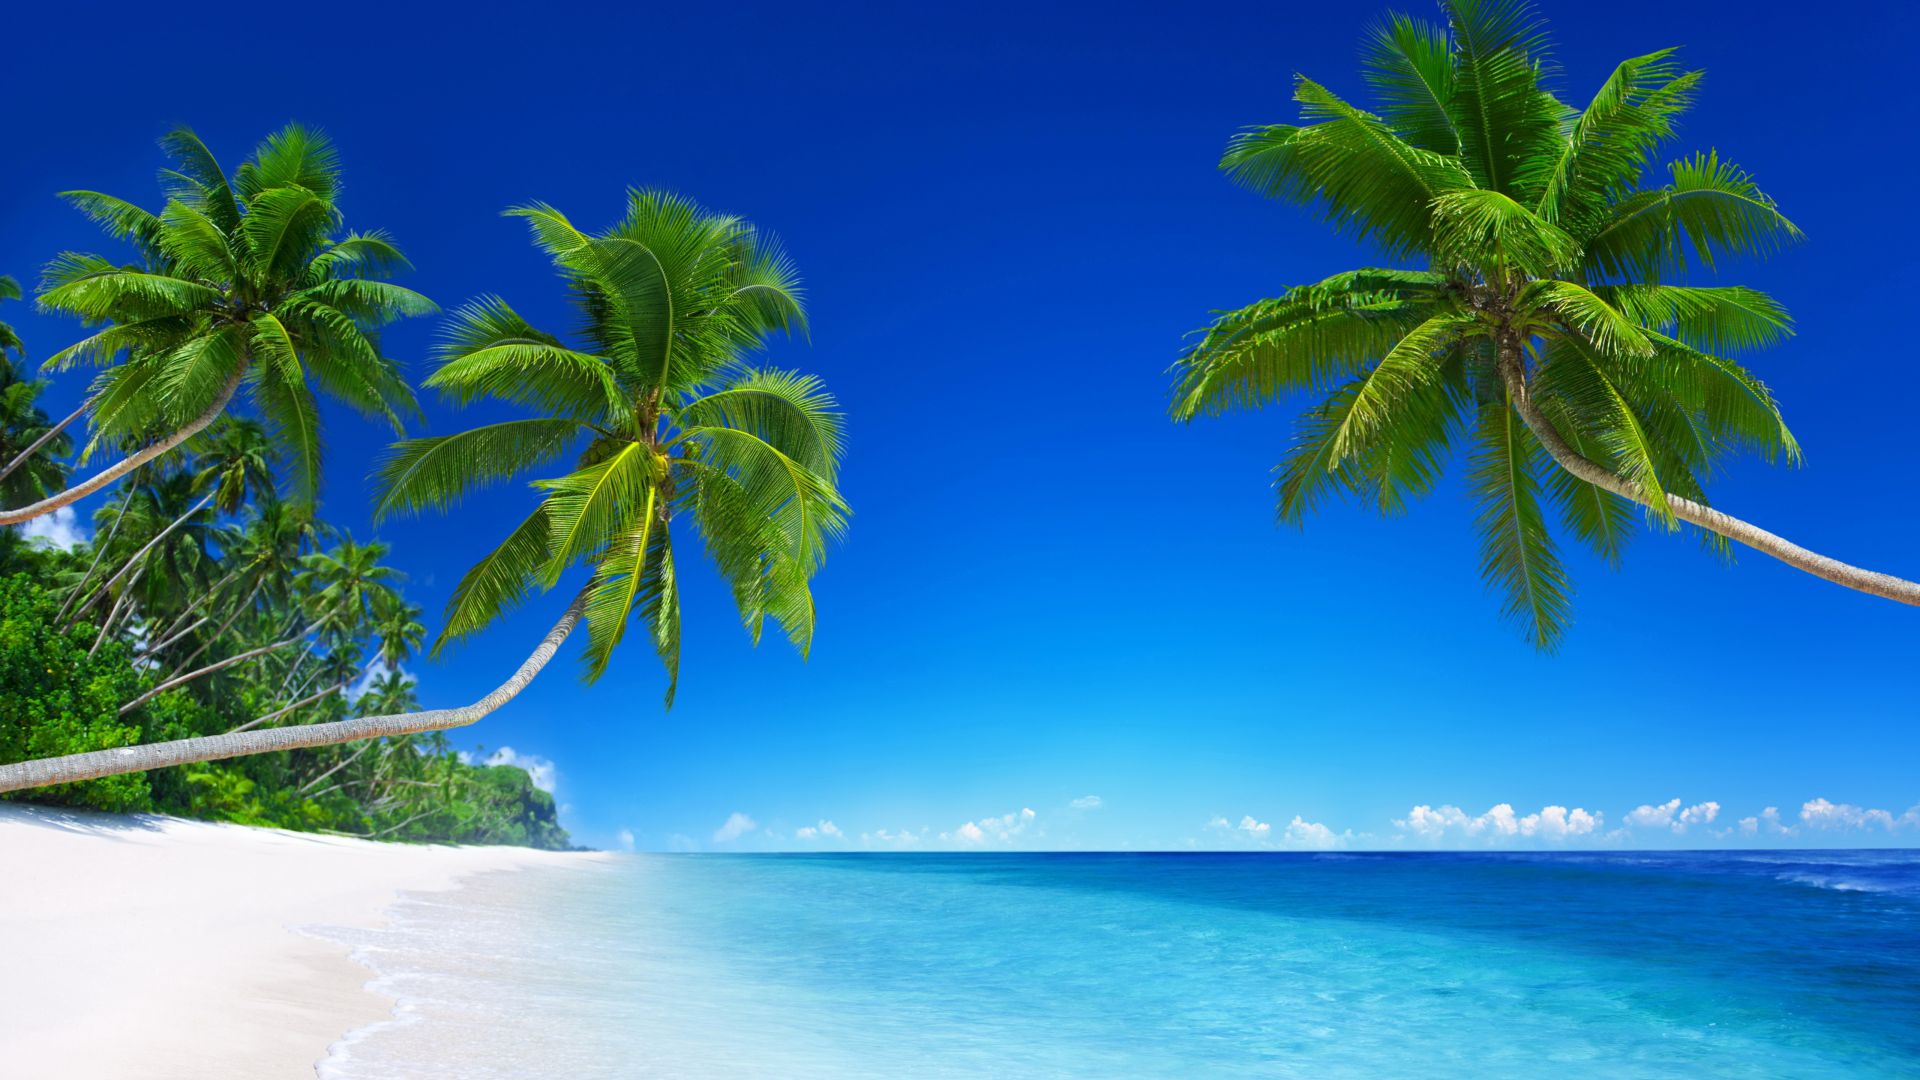 тропический пляж, 5k, 4k, 8k, парадайс, море, пальмы, tropical beach, 5k, 4k wallpaper, 8k, paradise, palms, sea, blue (horizontal)